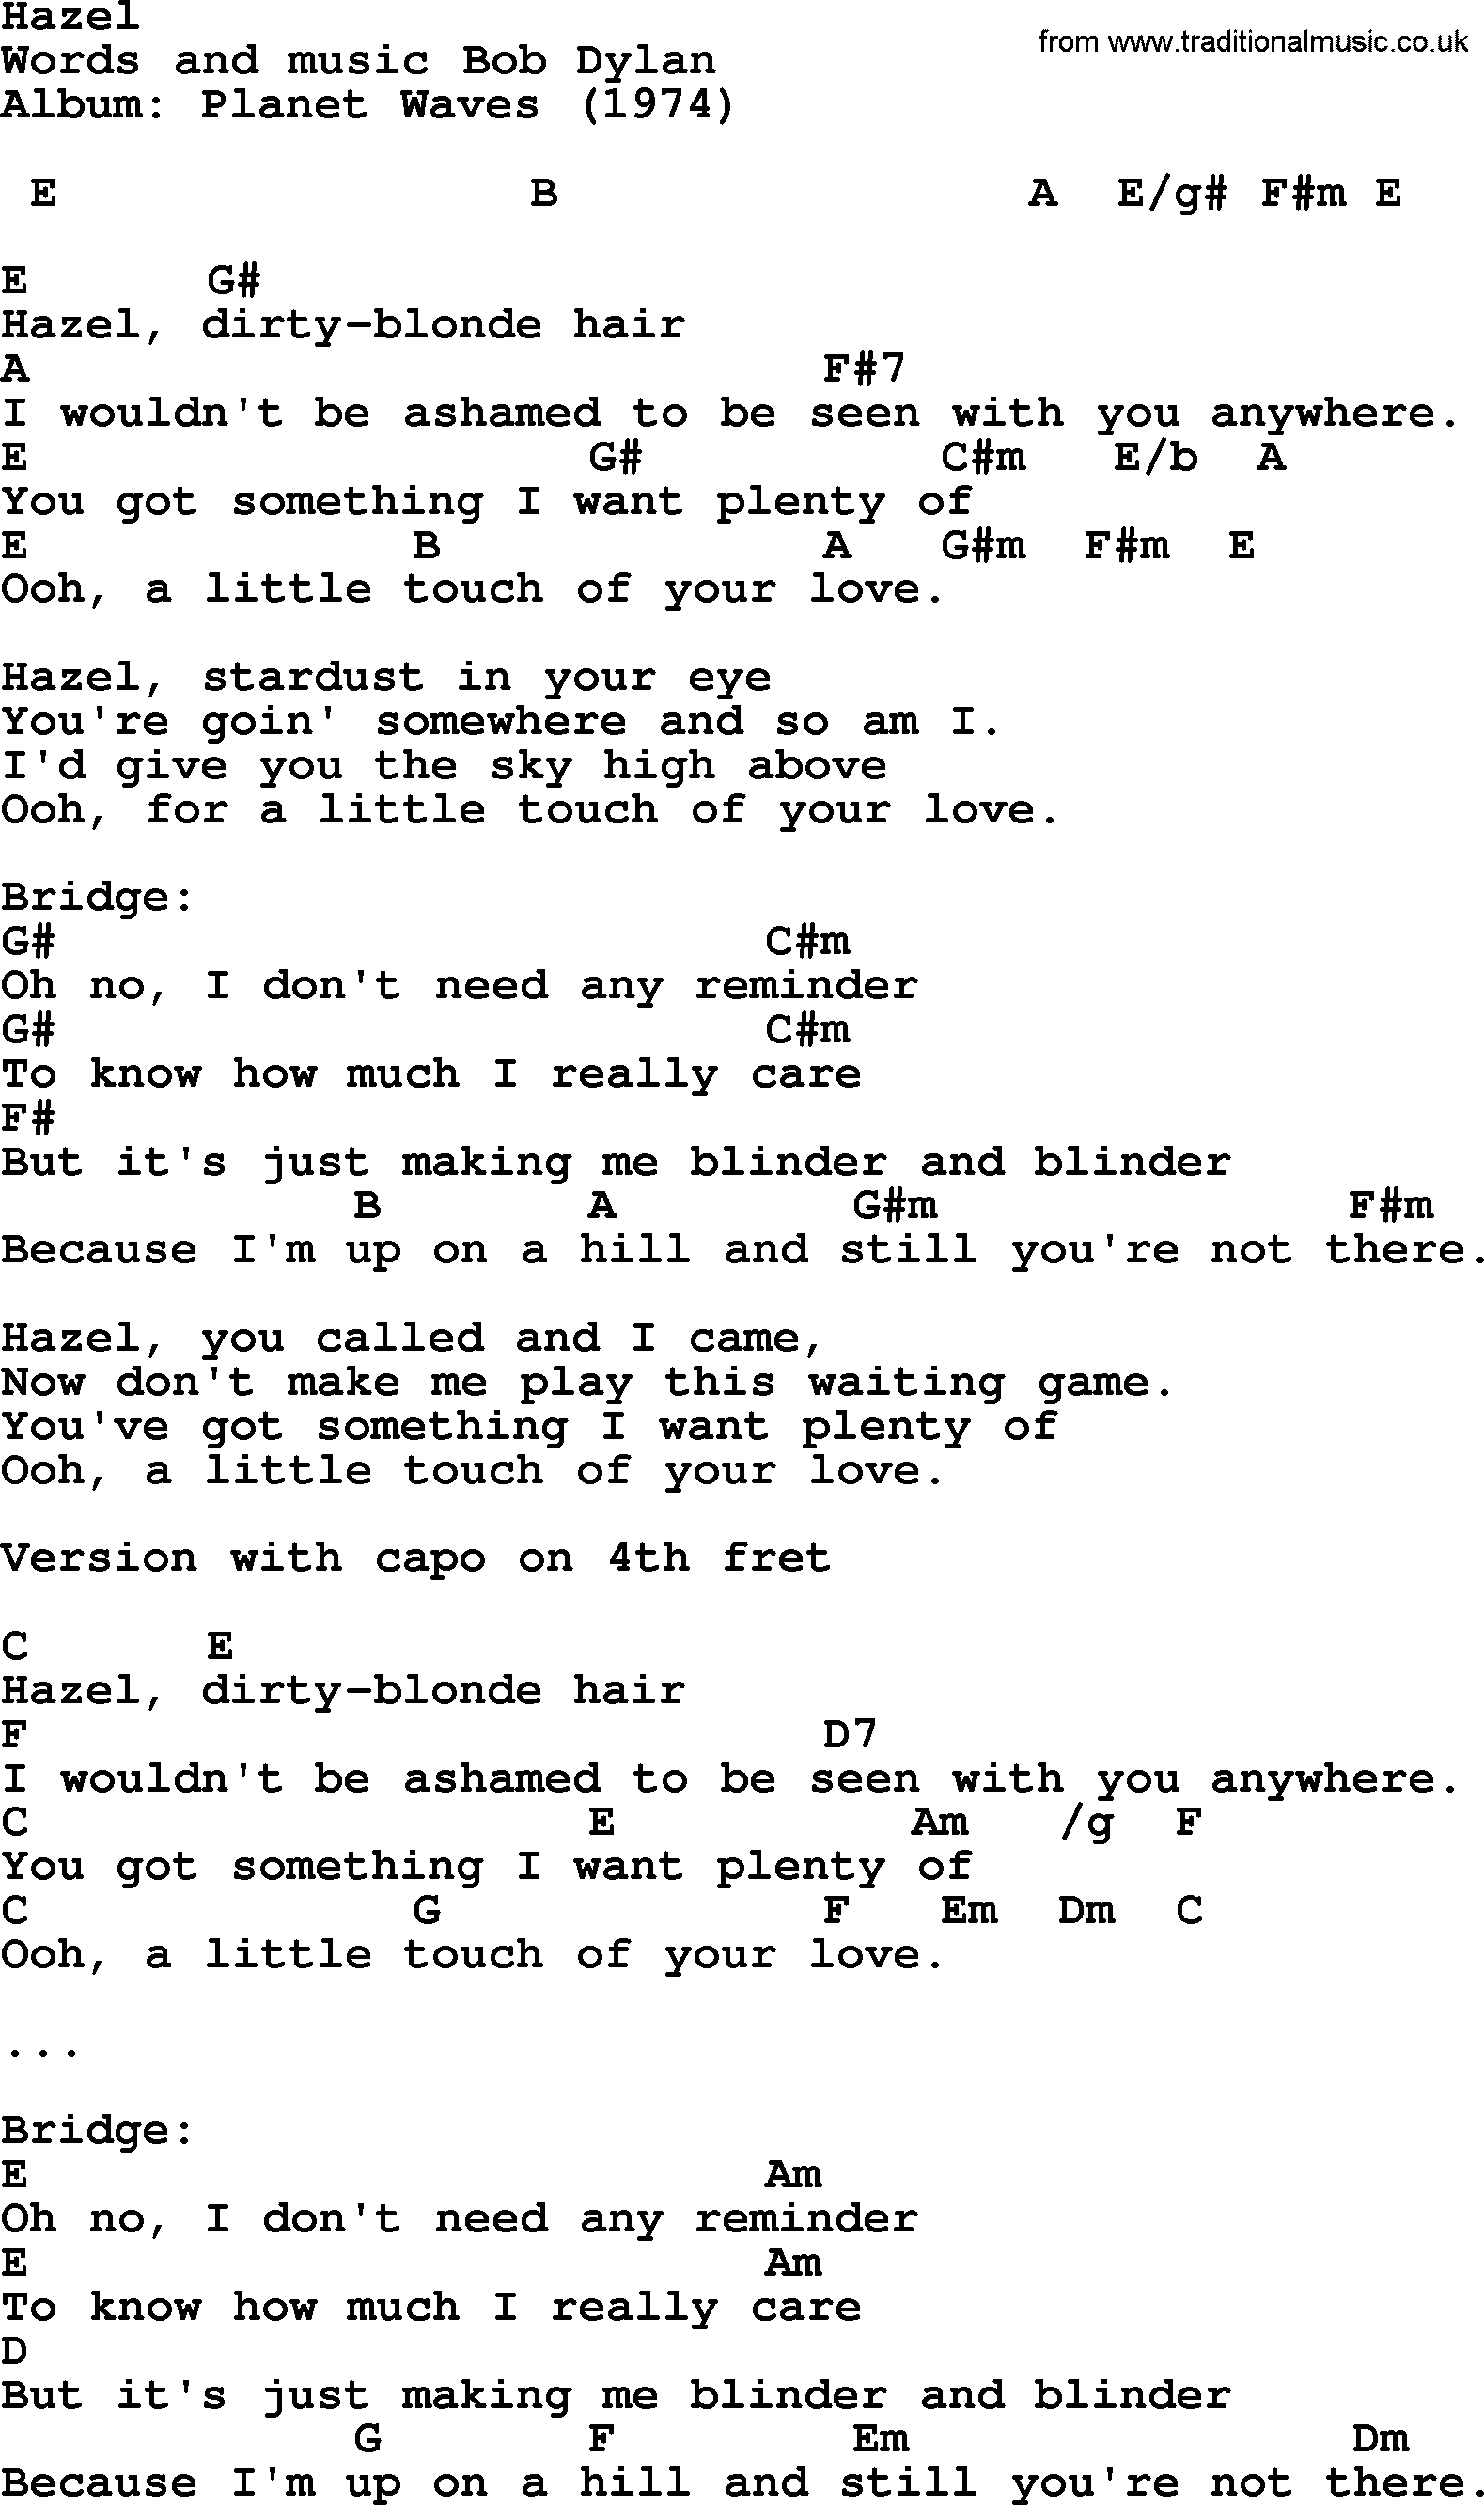 Bob Dylan song, lyrics with chords - Hazel